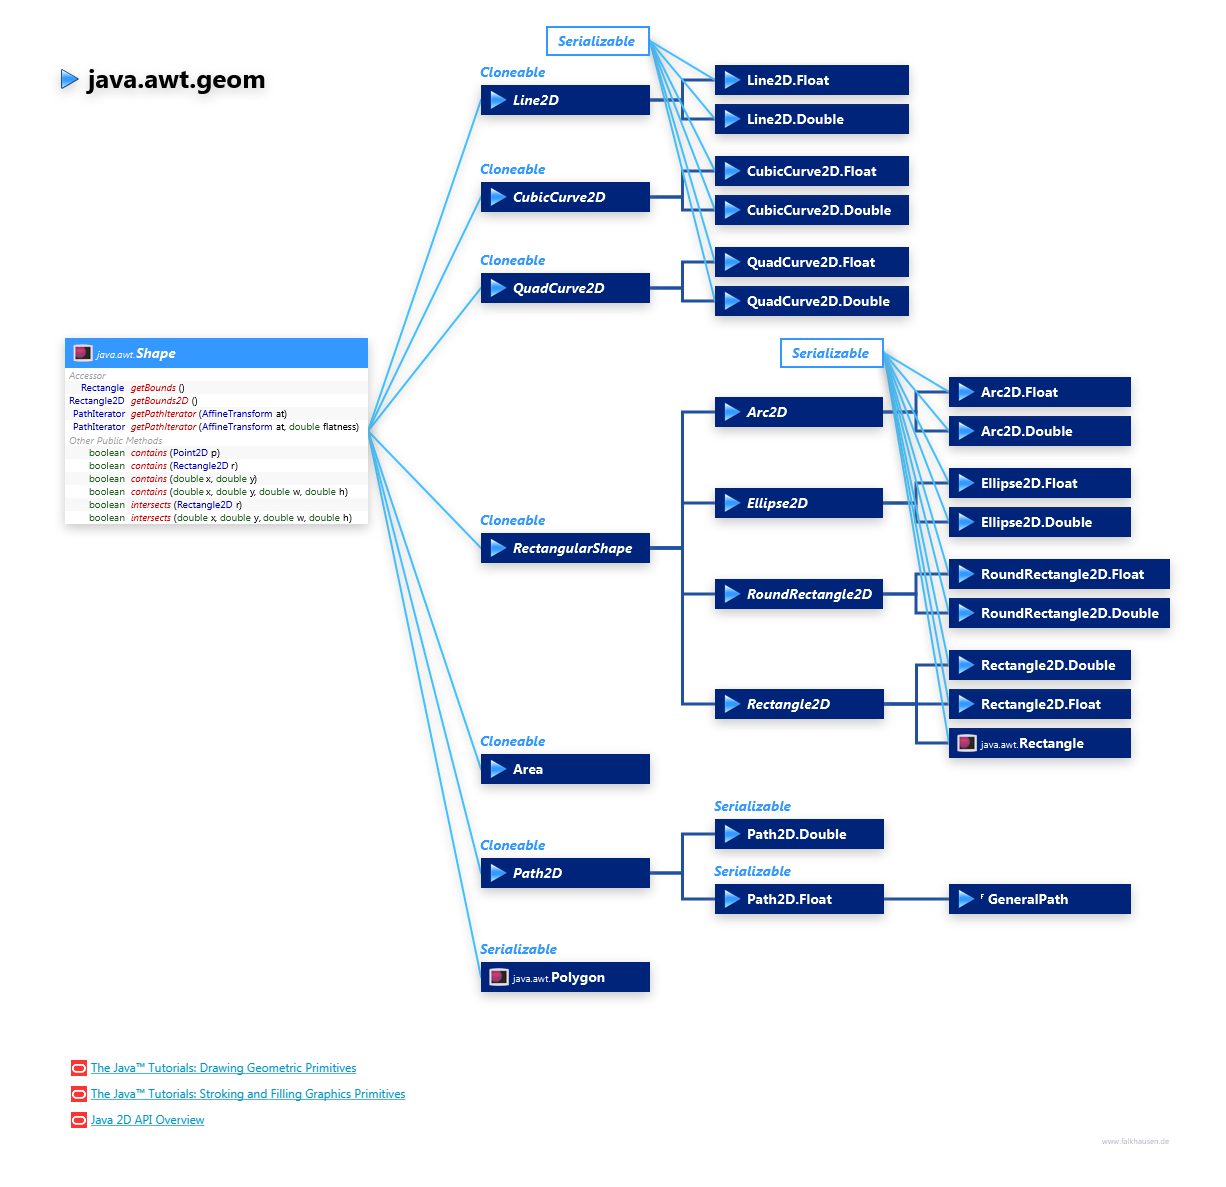 java.awt.geom Shape Hierarchy class diagram and api documentation for Java 8